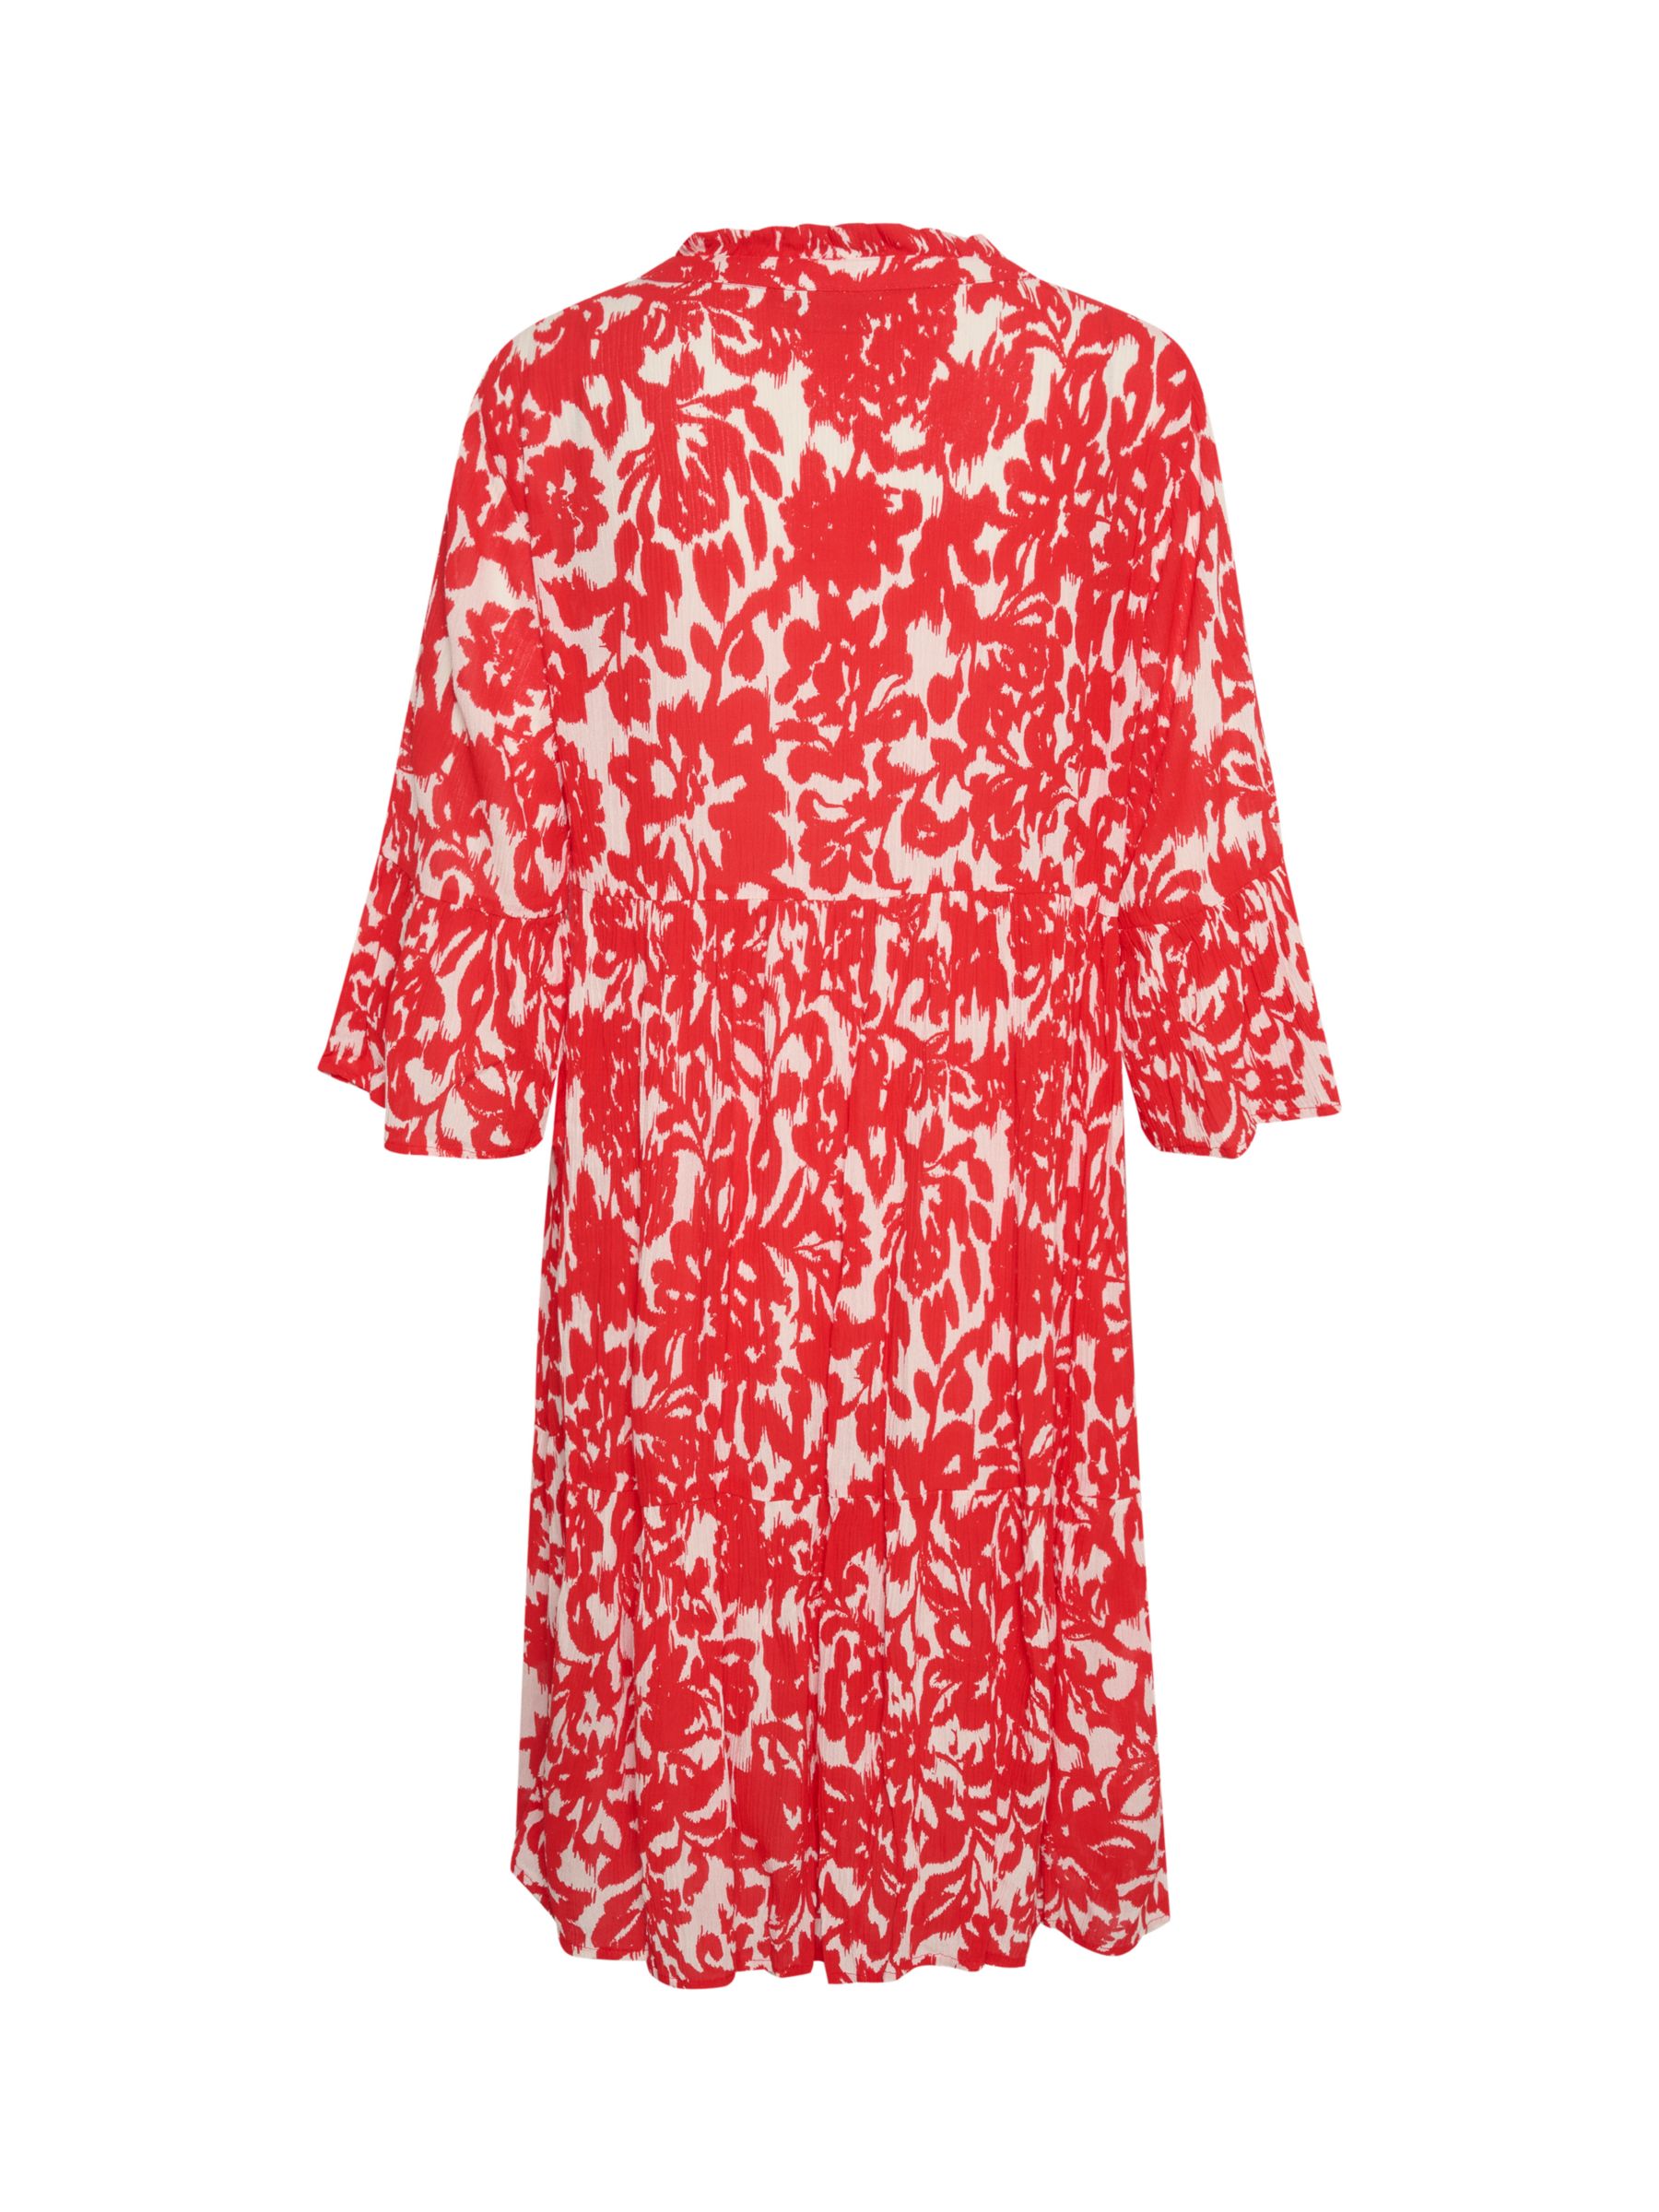 KAFFE Ellen Amber Dress, Red/White at John Lewis & Partners